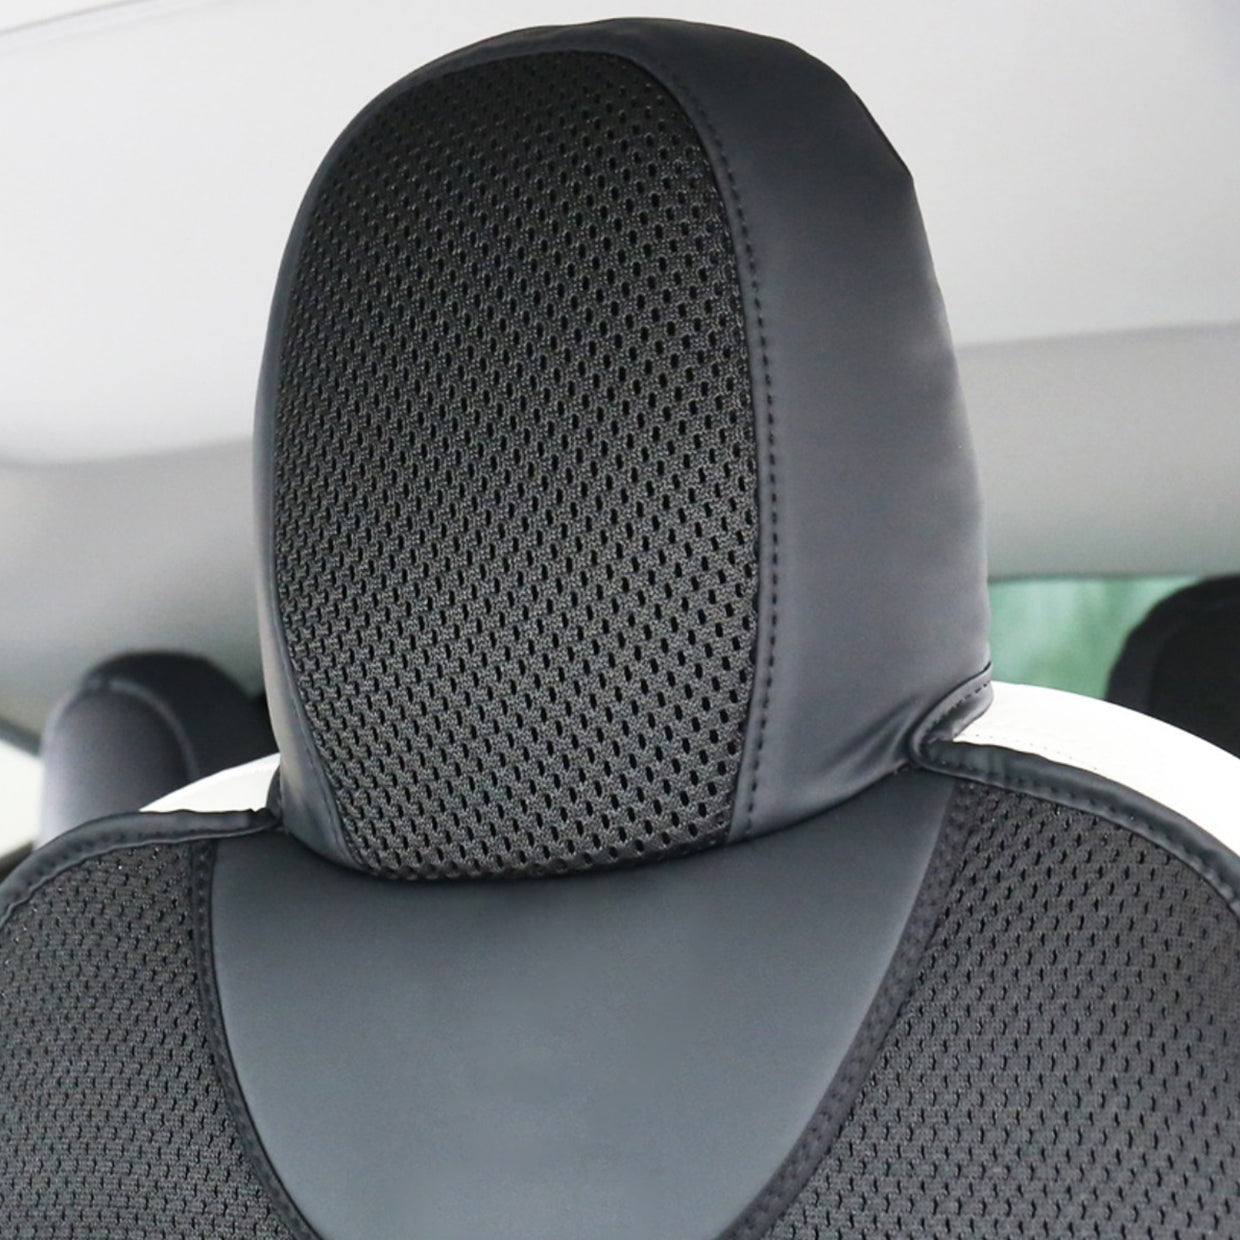 Cooling Padded Car Seat Cushion for Short People - China Cooling Car Seat  Cushion, Padded Car Seat Cushion